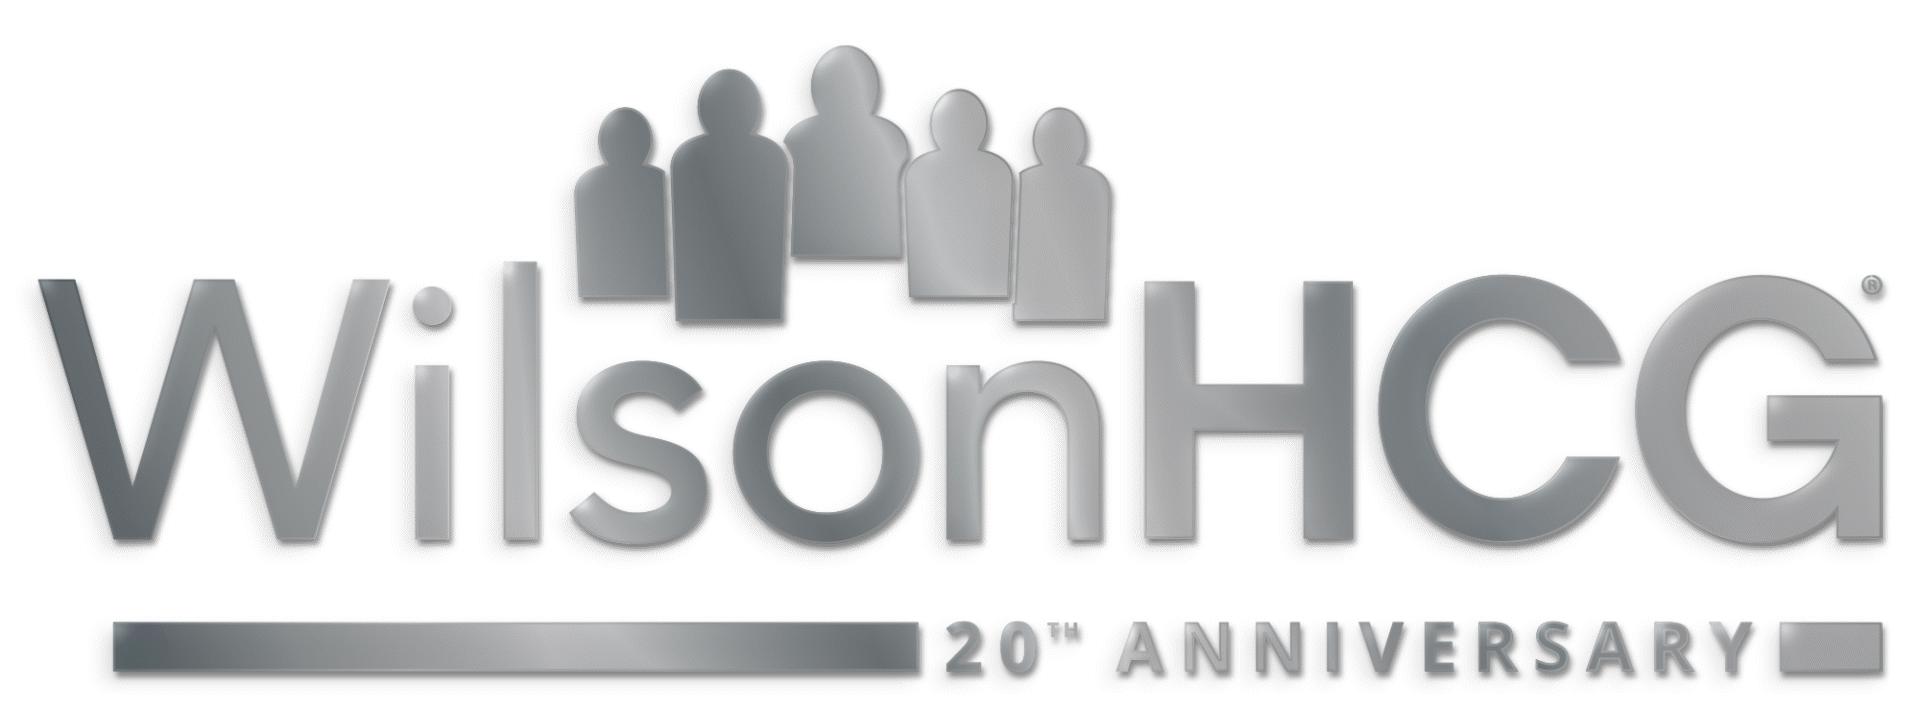 WilsonHCG_20th_anniversary_logo_7_oneloop (1)